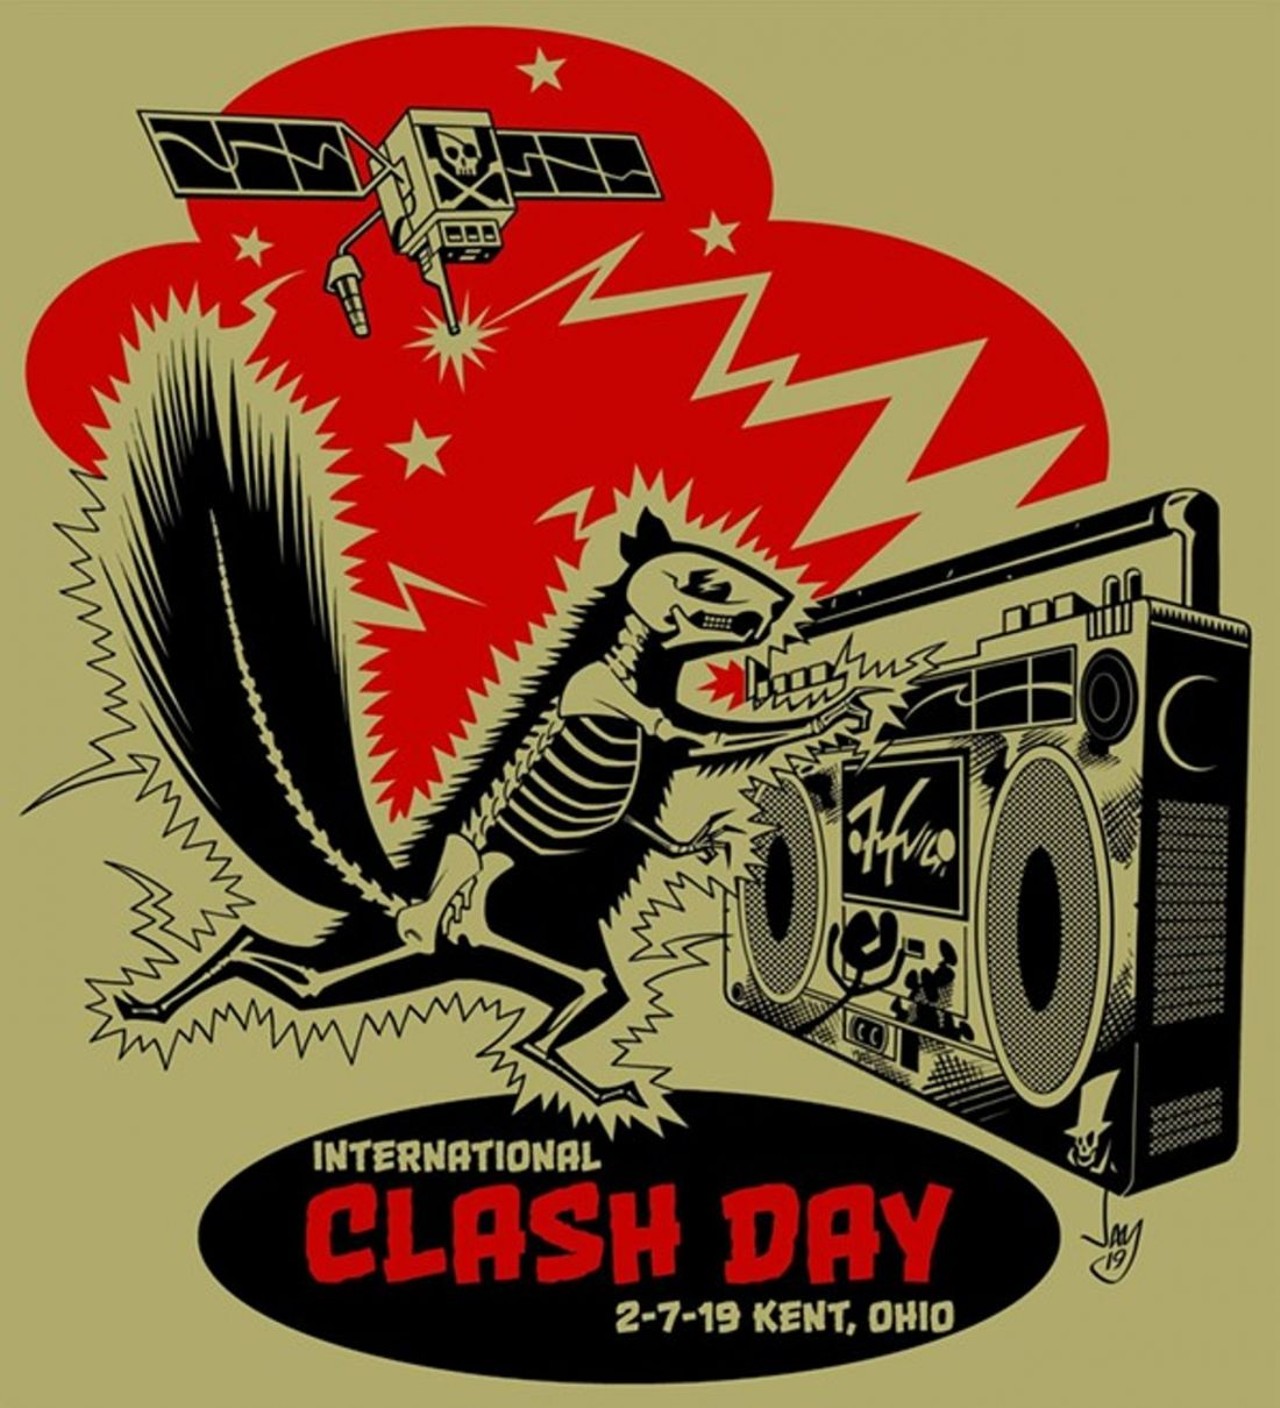  International Clash Day 
Thu, Feb. 7-Sat, Feb. 9
Event Poster Art